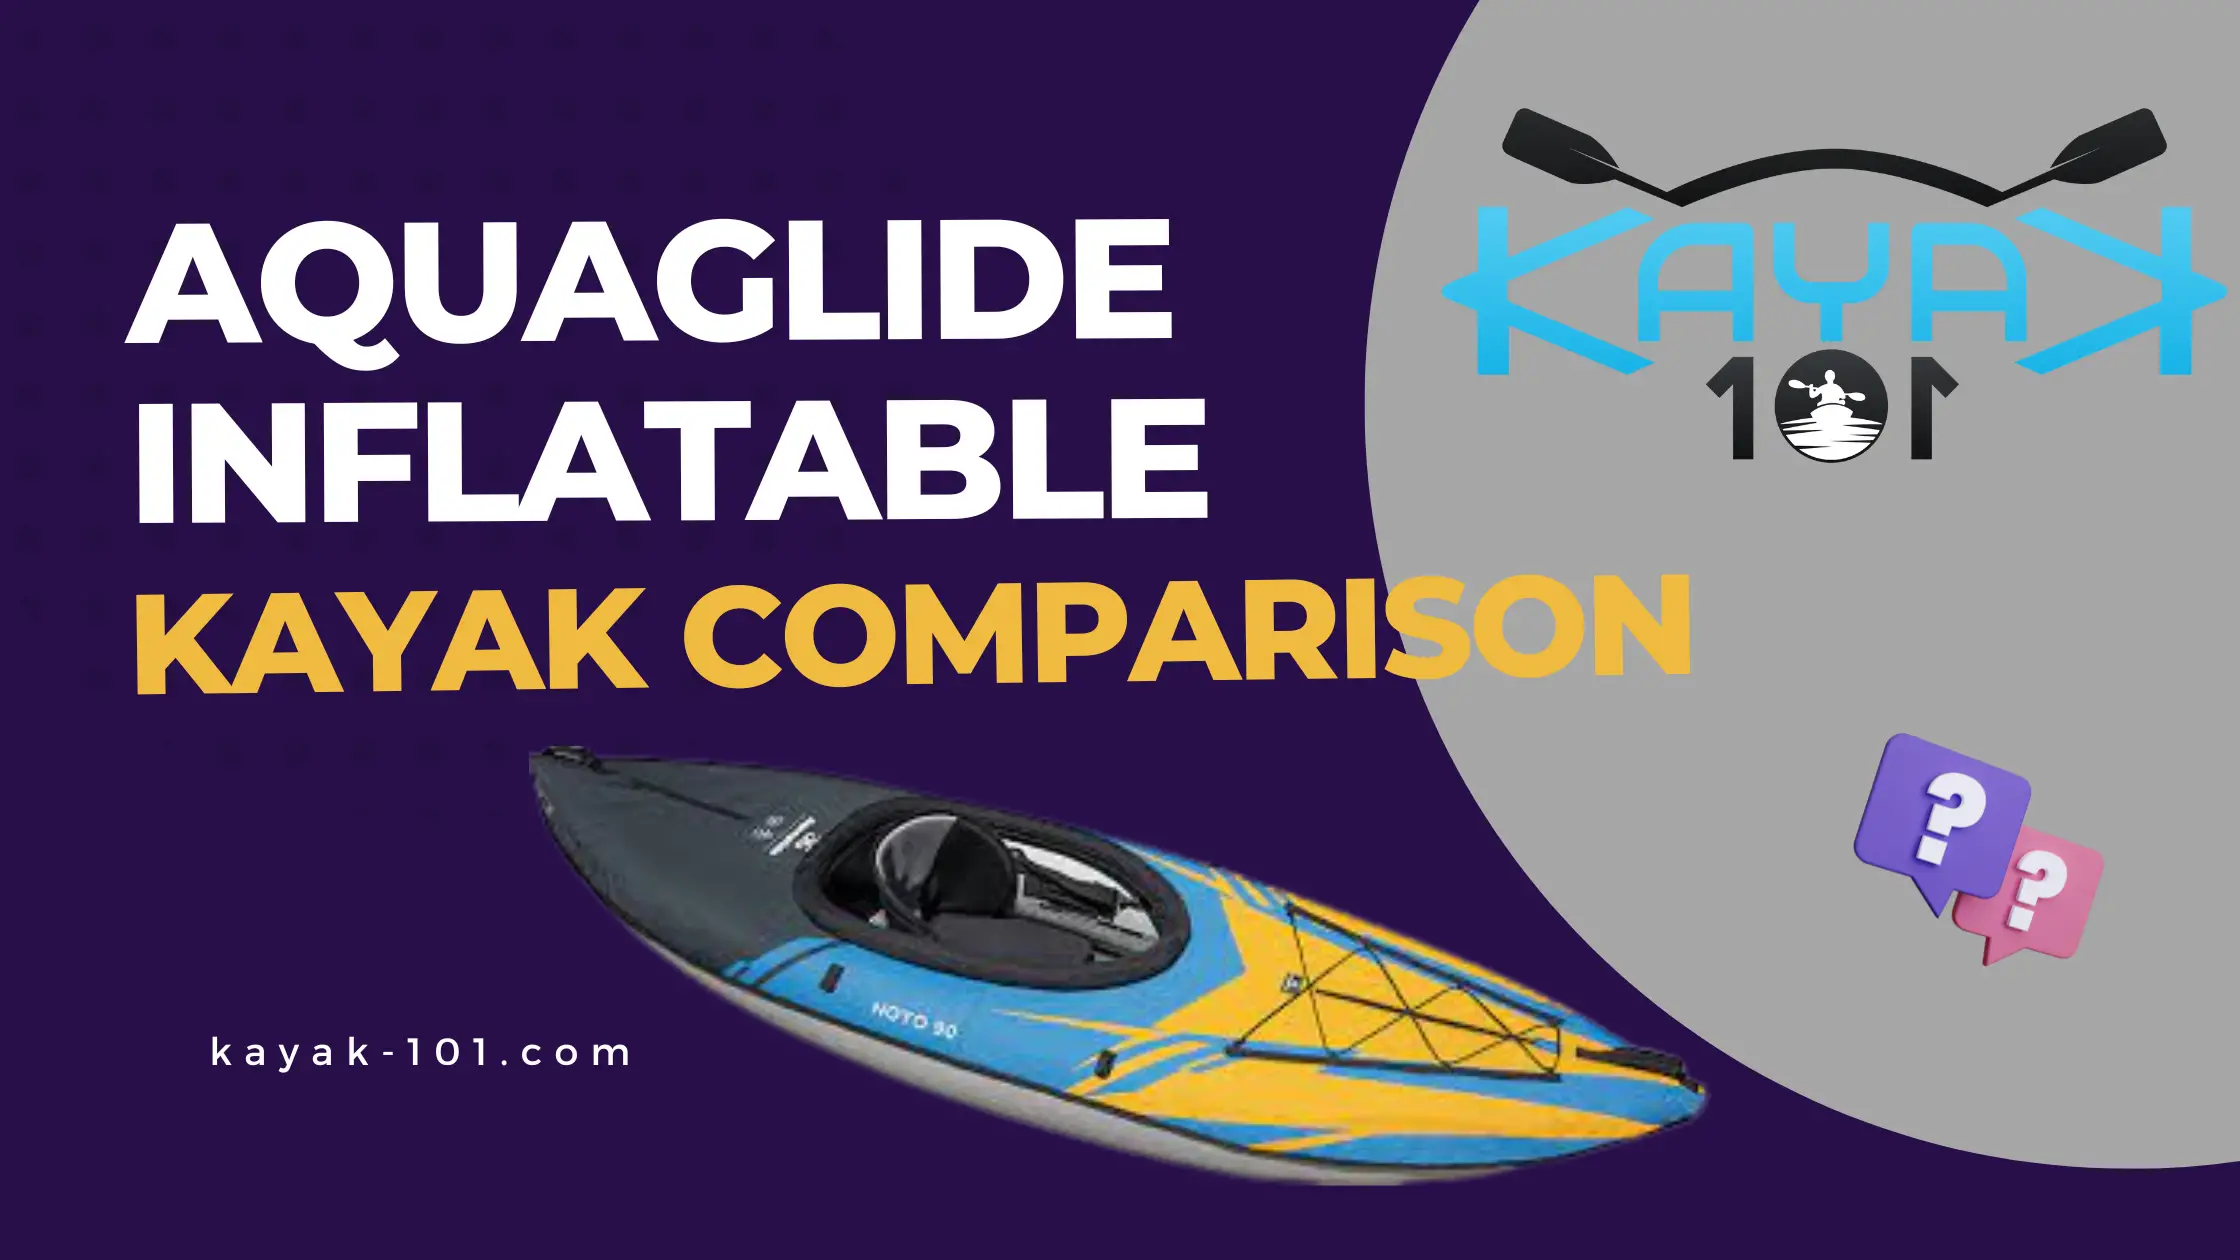 Aquaglide inflatable kayak comparison